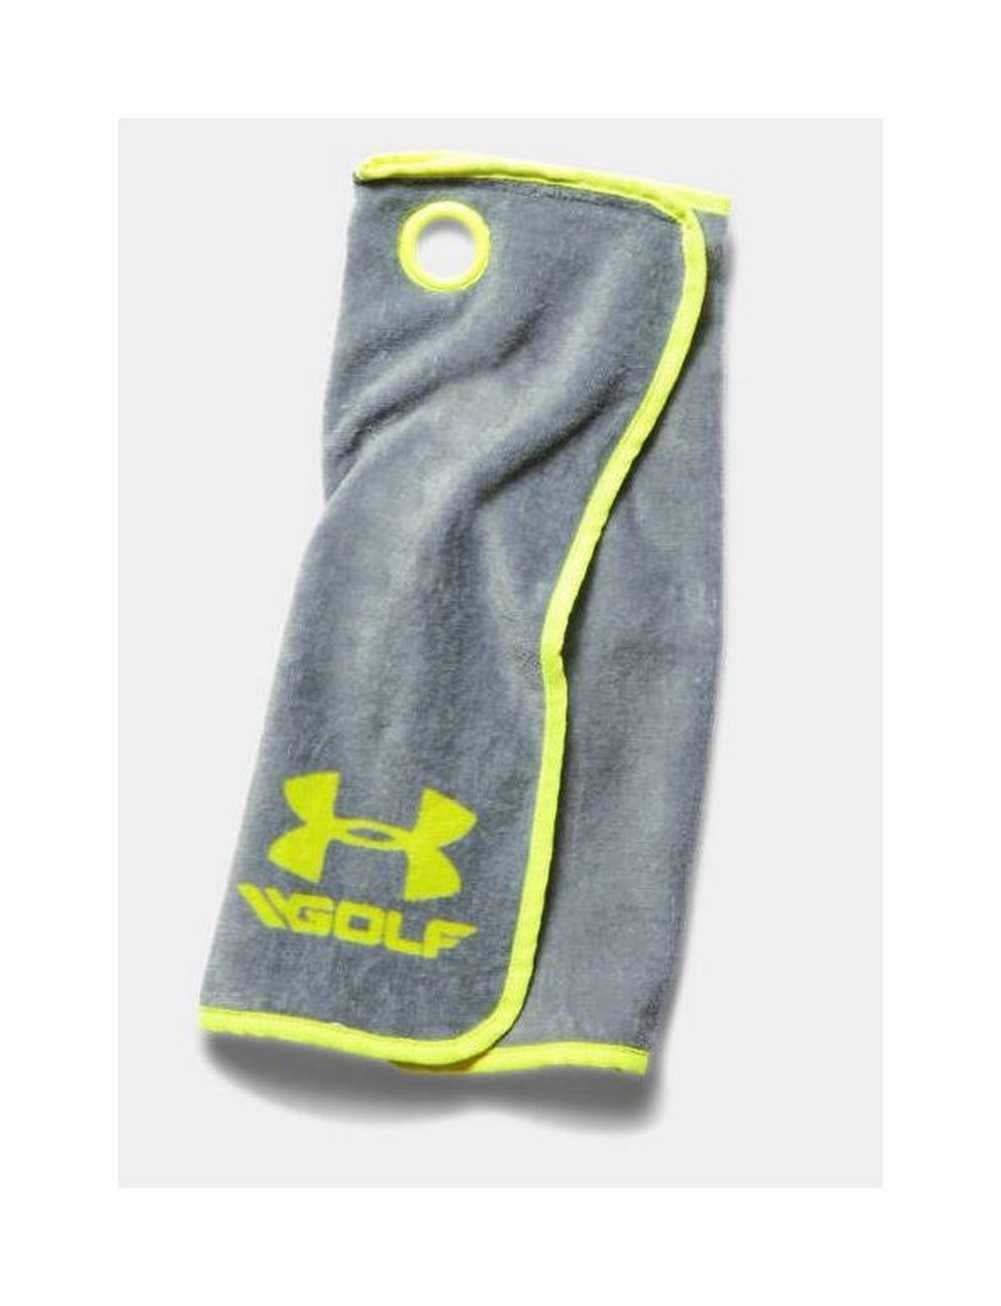 ua golf towel